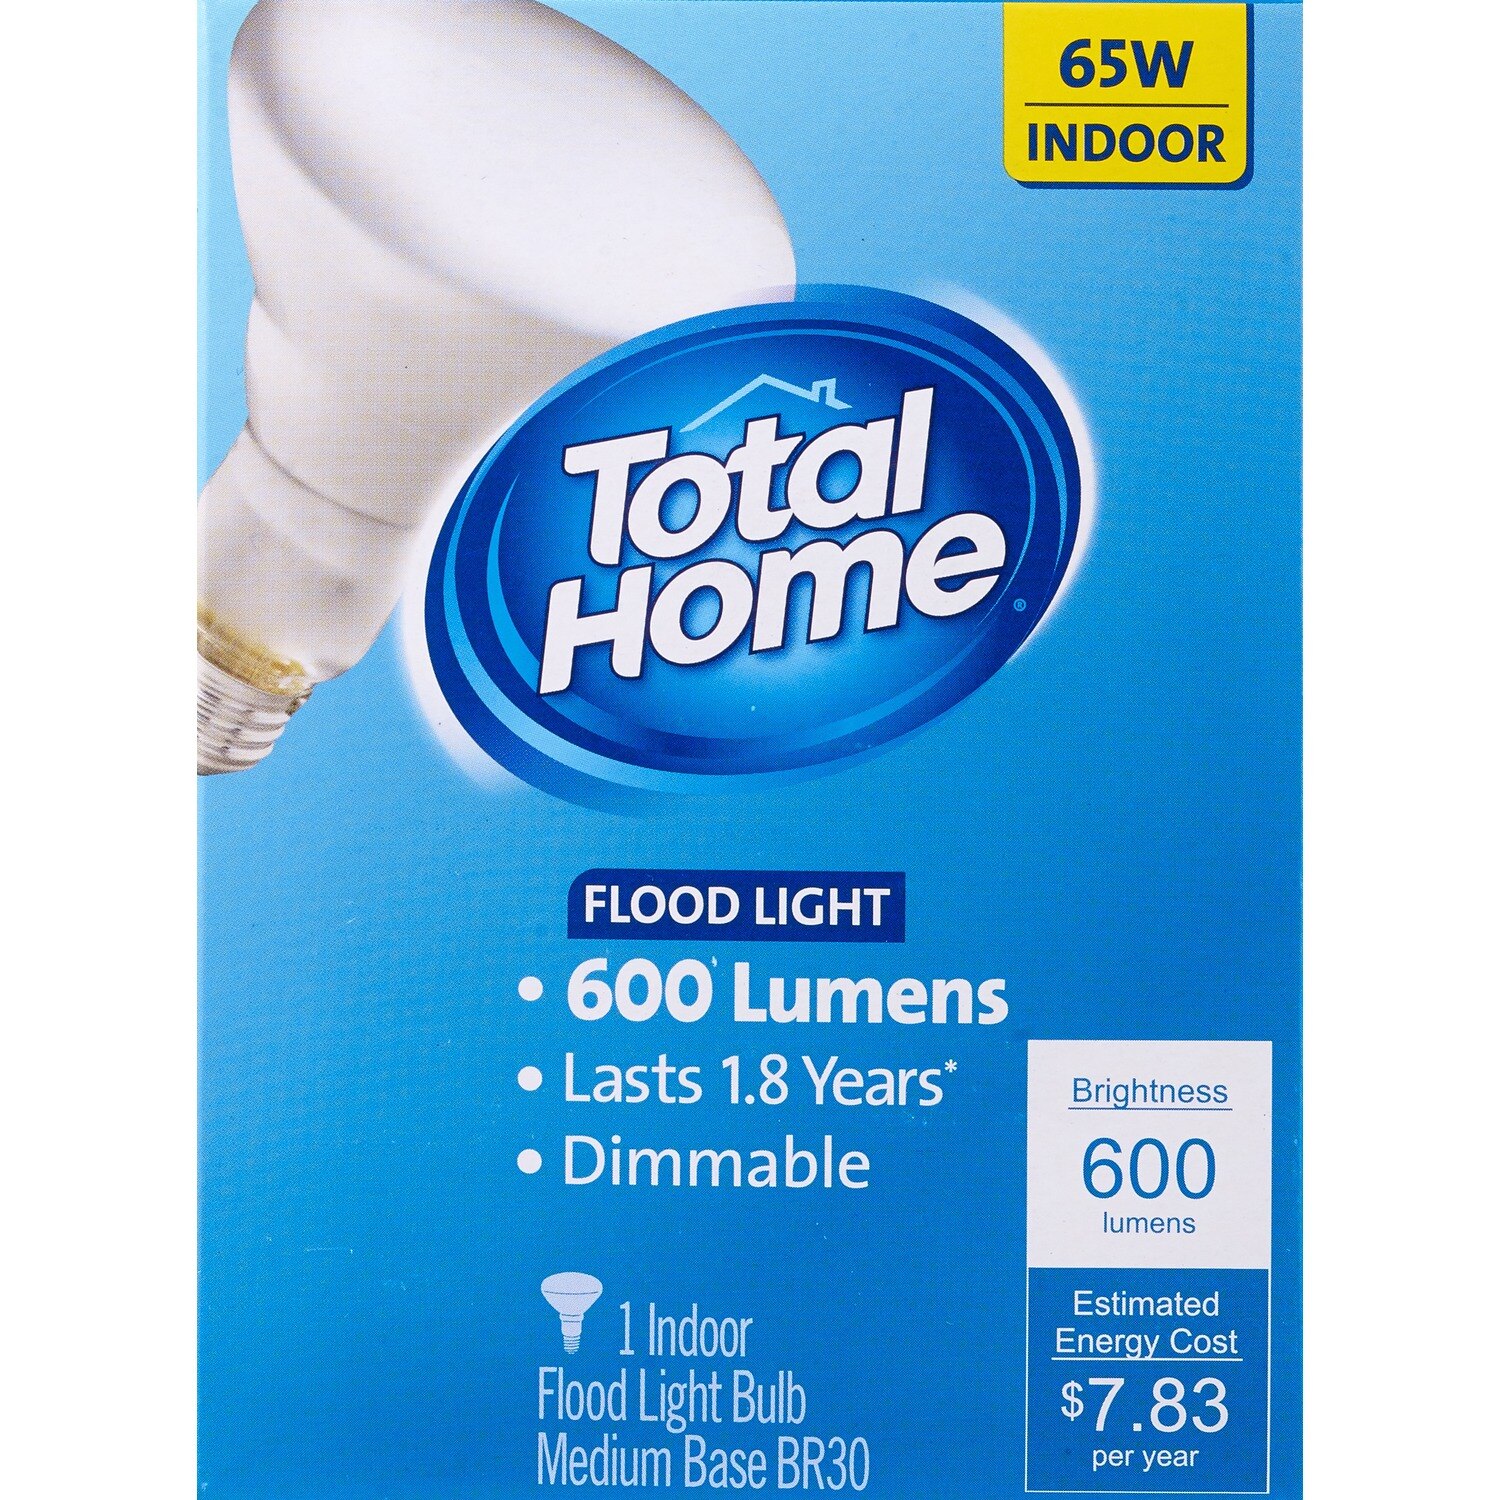 Total Home Flood Light Indoor Bulb, 600 Lumens, 65W